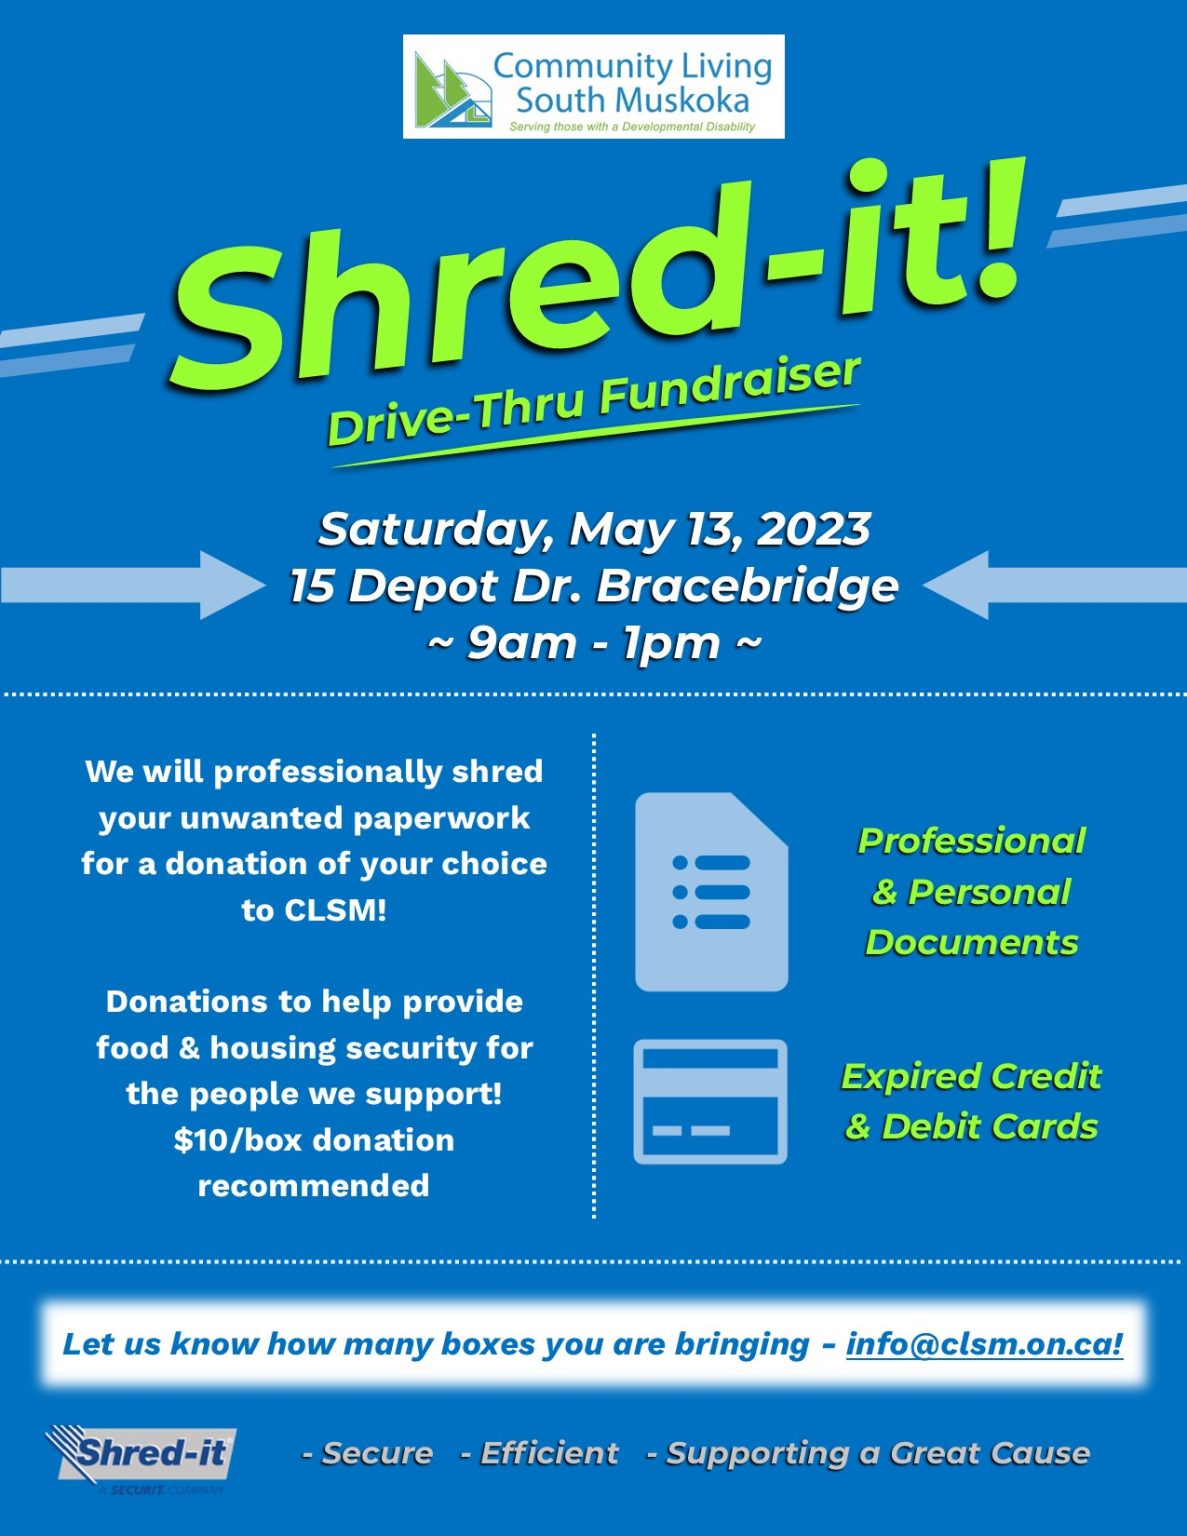 Shred-it Drive-Thru Fundraiser – Community Living South Muskoka